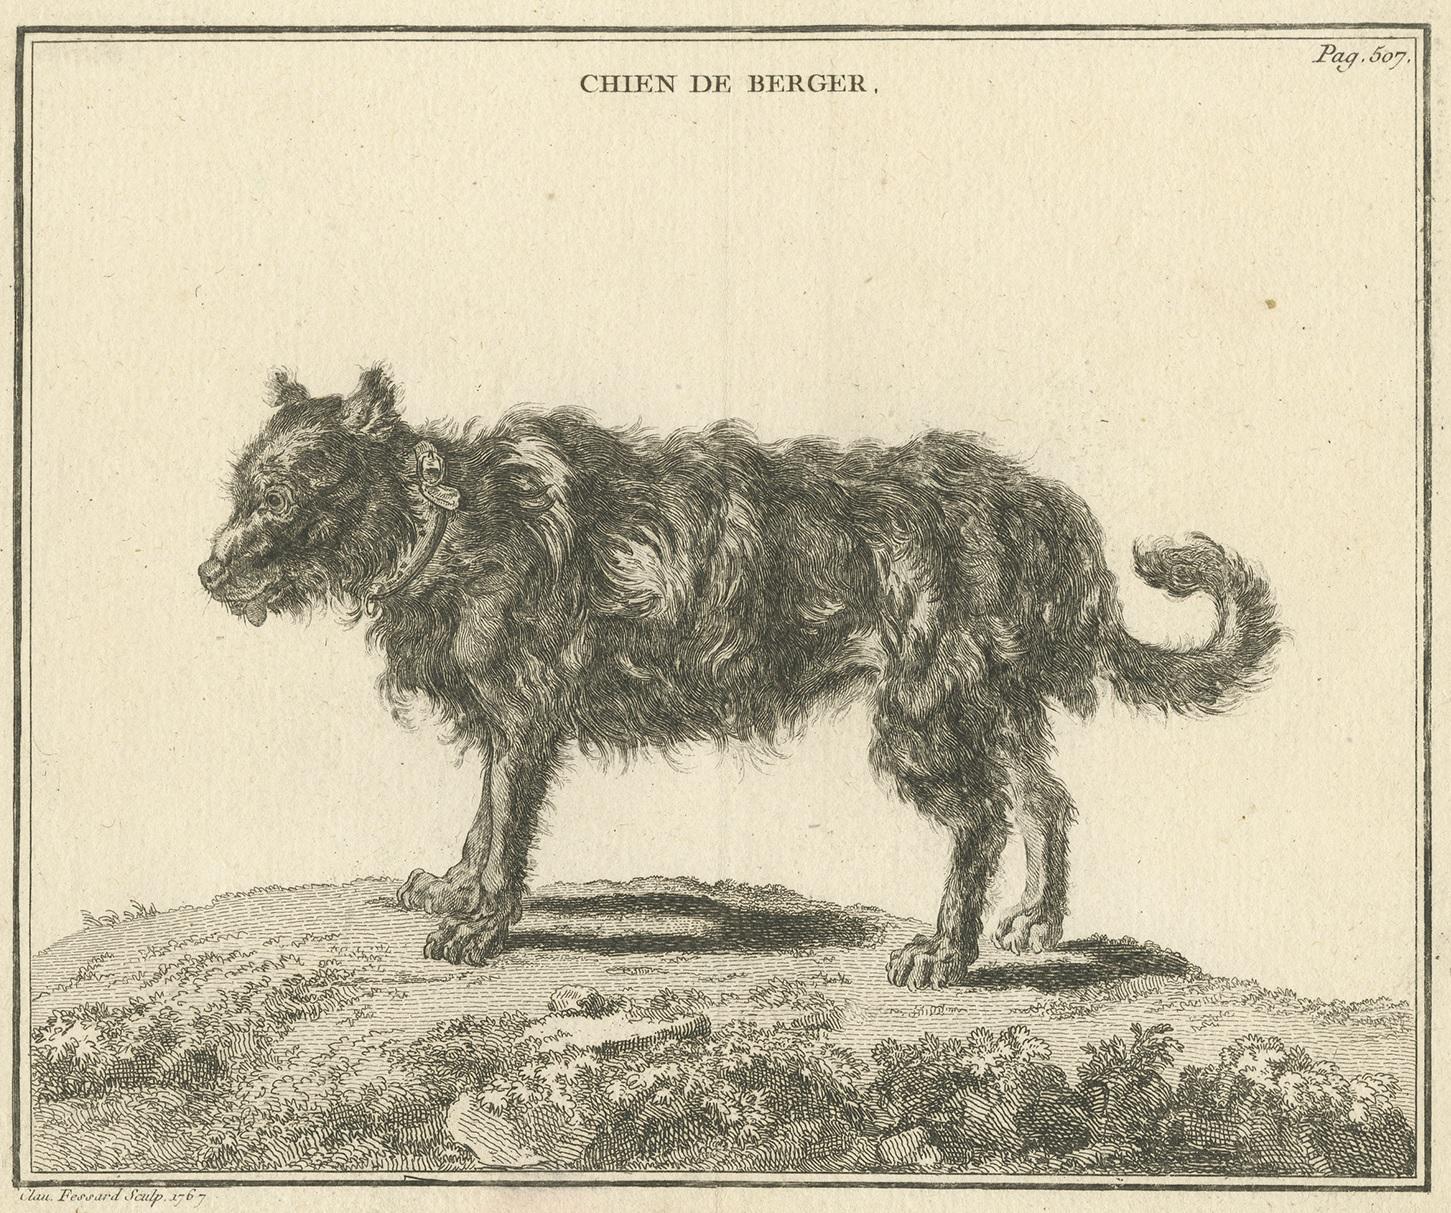 Antique print titled 'Chien de bergere'. Copper engraving of a sheepdog. This print originates from 'Handboek der genees- en verloskunde van het vee (..)' by A. Numan. Published by R.J. Schierbeek, 1819. Engraved by C. Fessard.